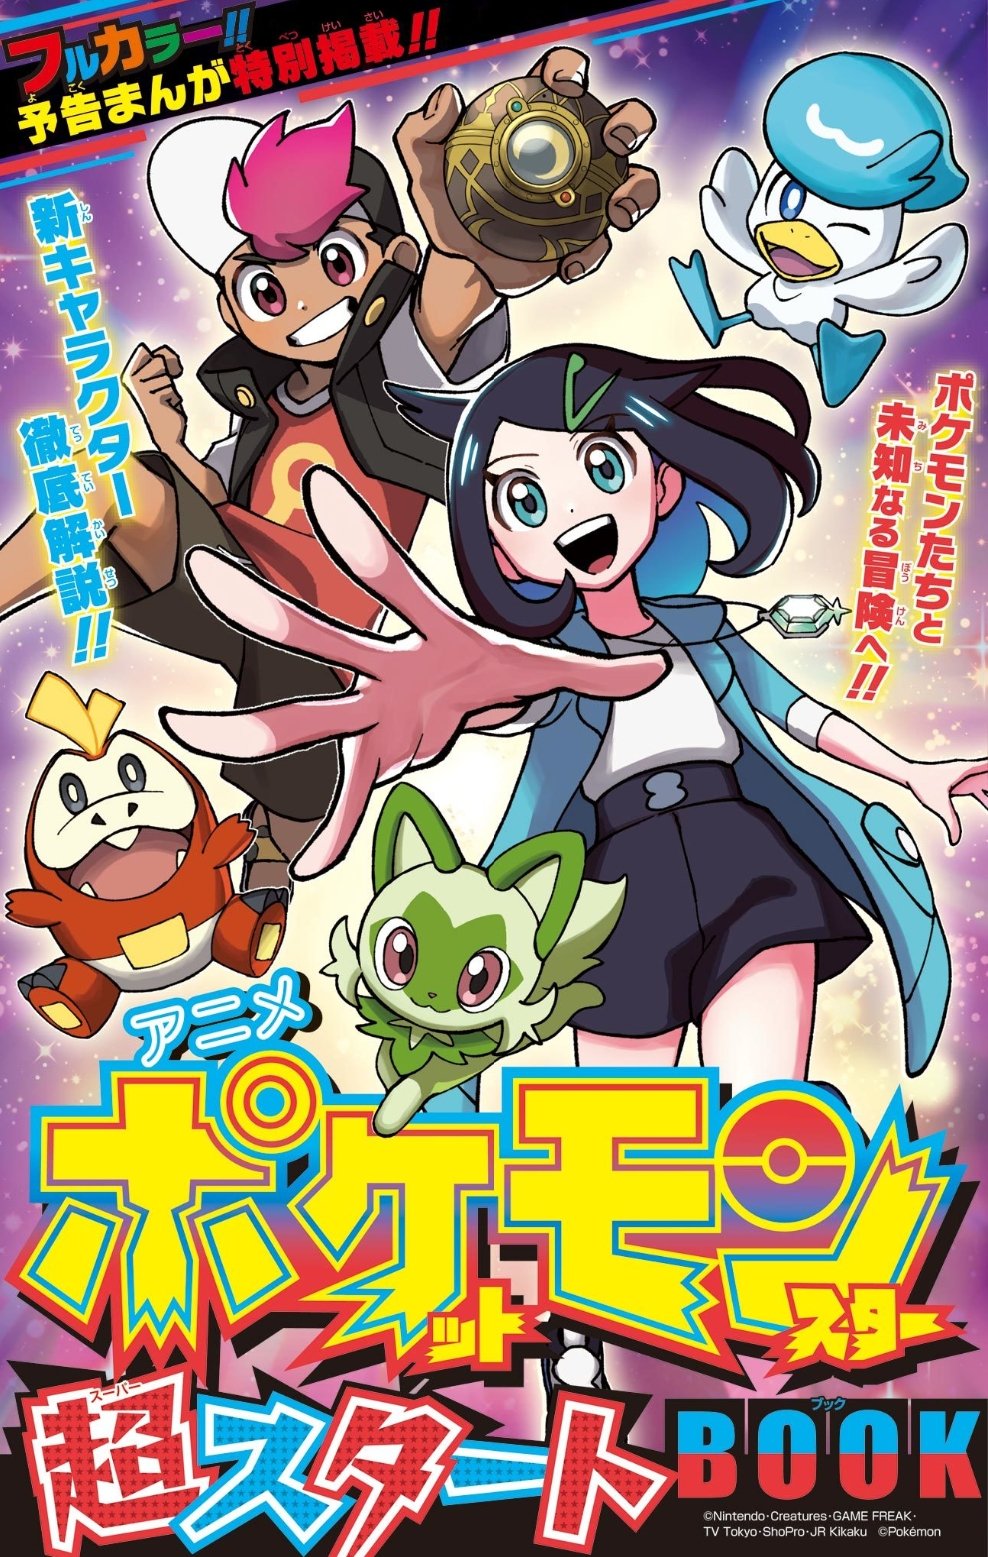 Nuevo manga de Pokémon